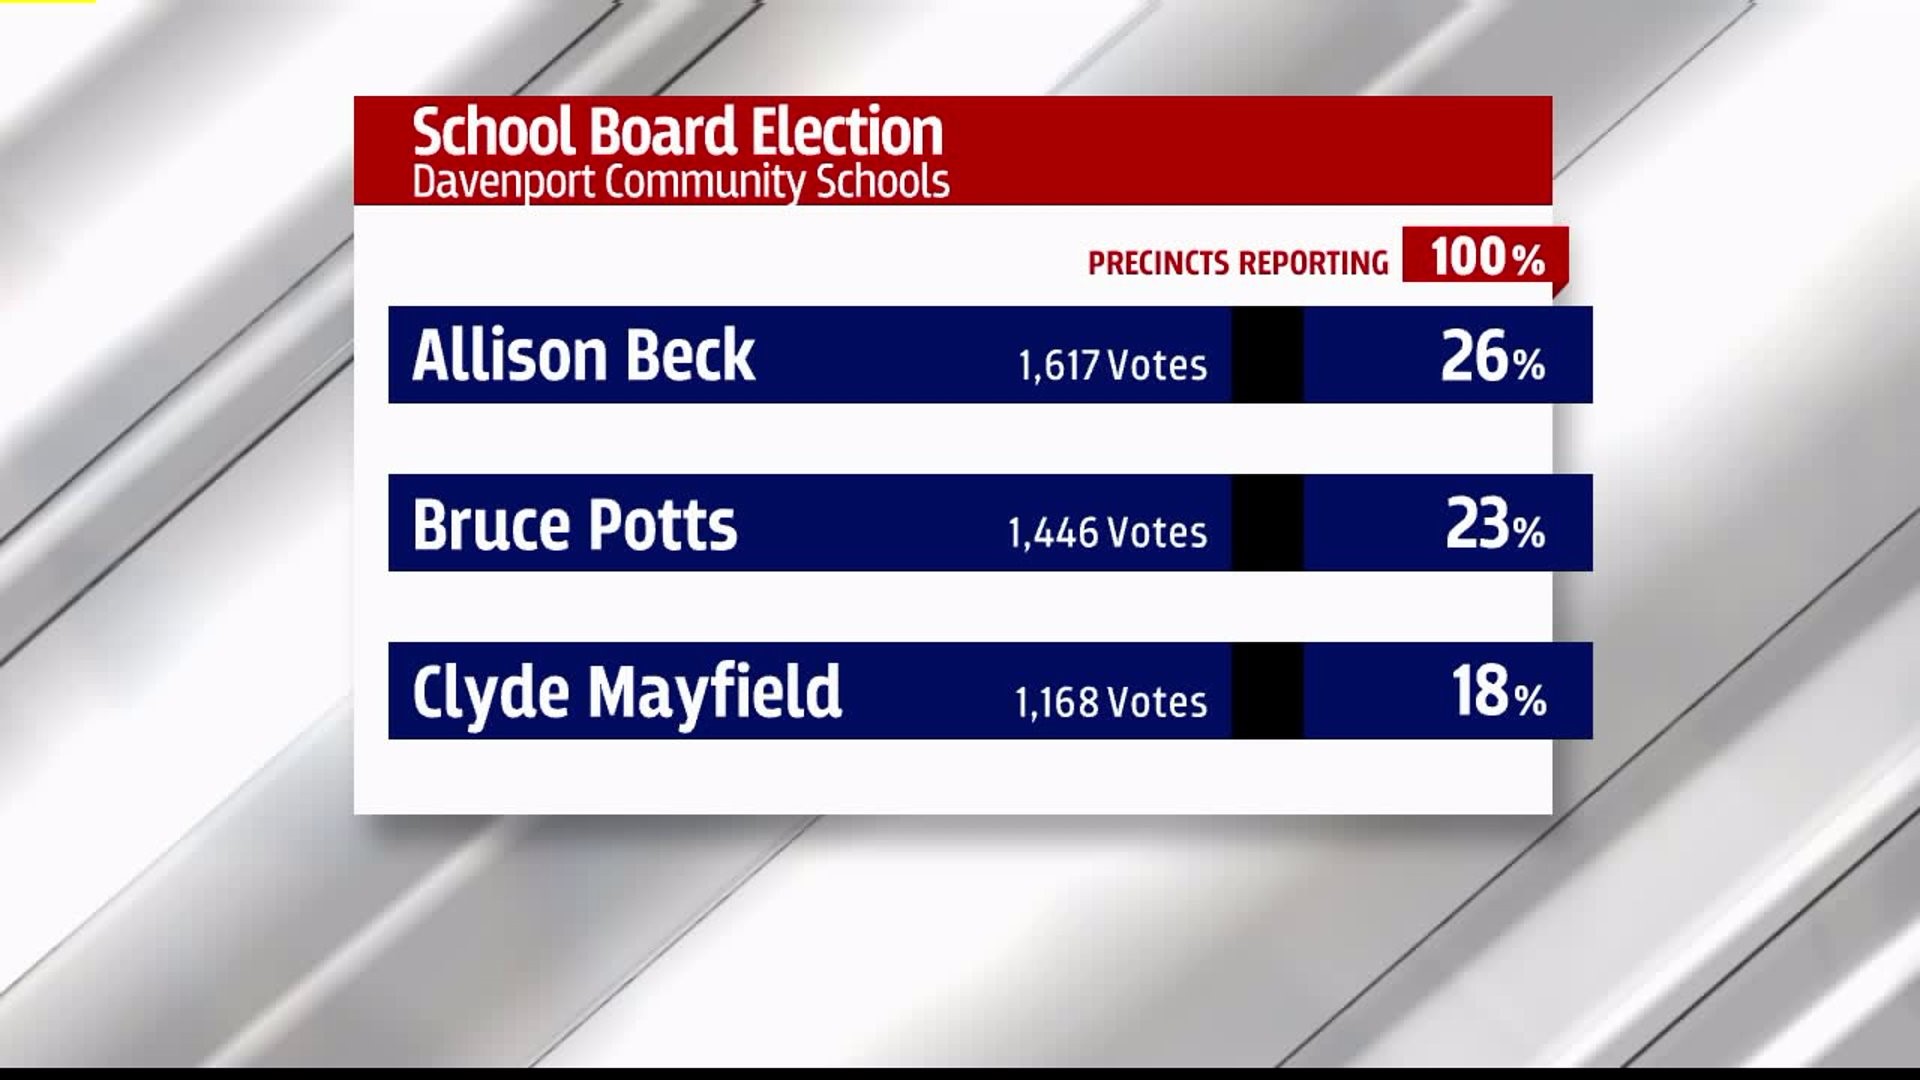 School board election results